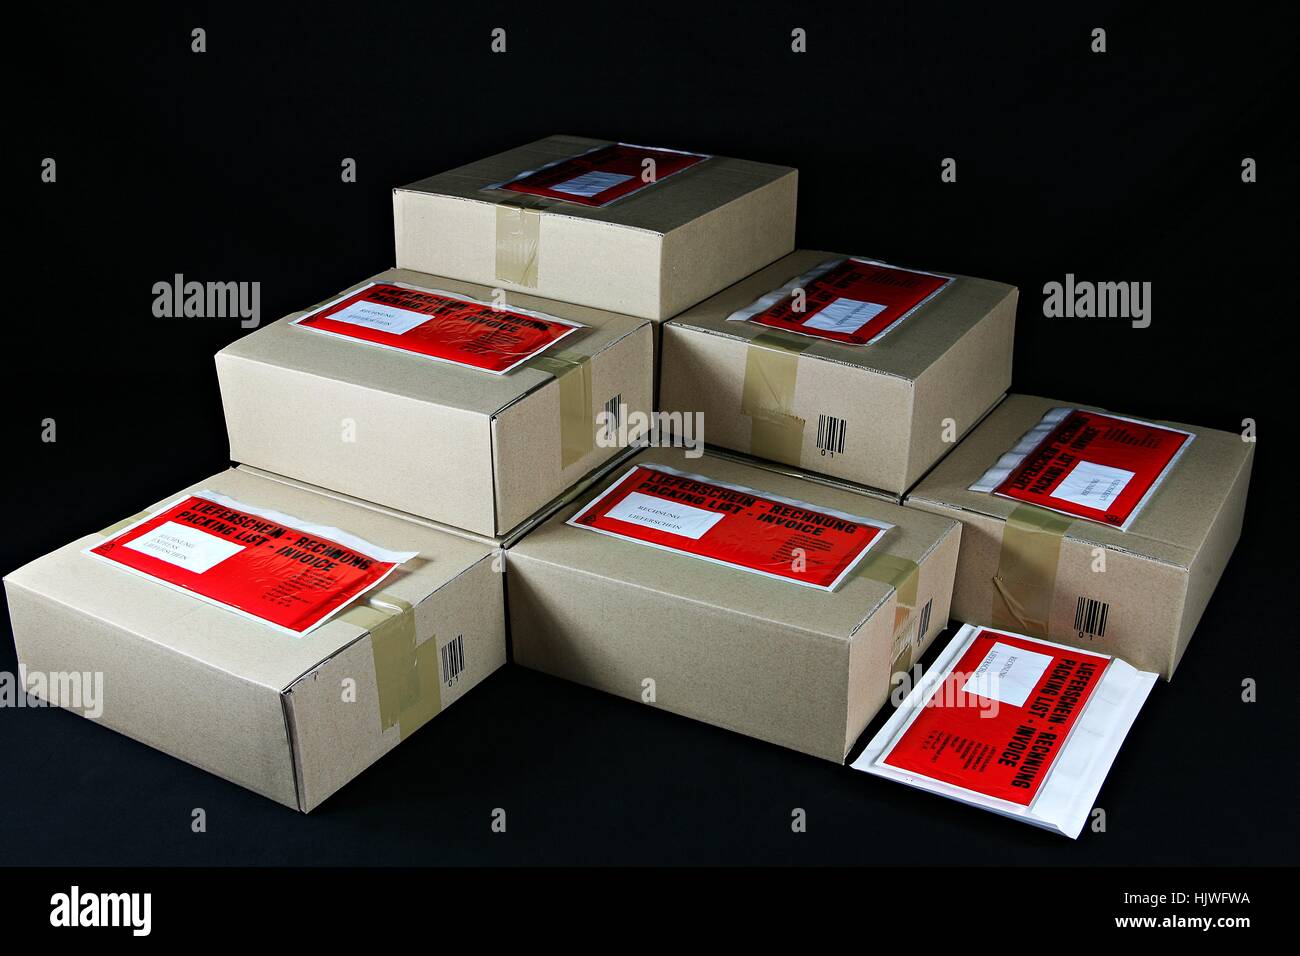 Paket, Post, Paketdienst, Pakete, Pakete, Post, Paket, Paket  Stockfotografie - Alamy